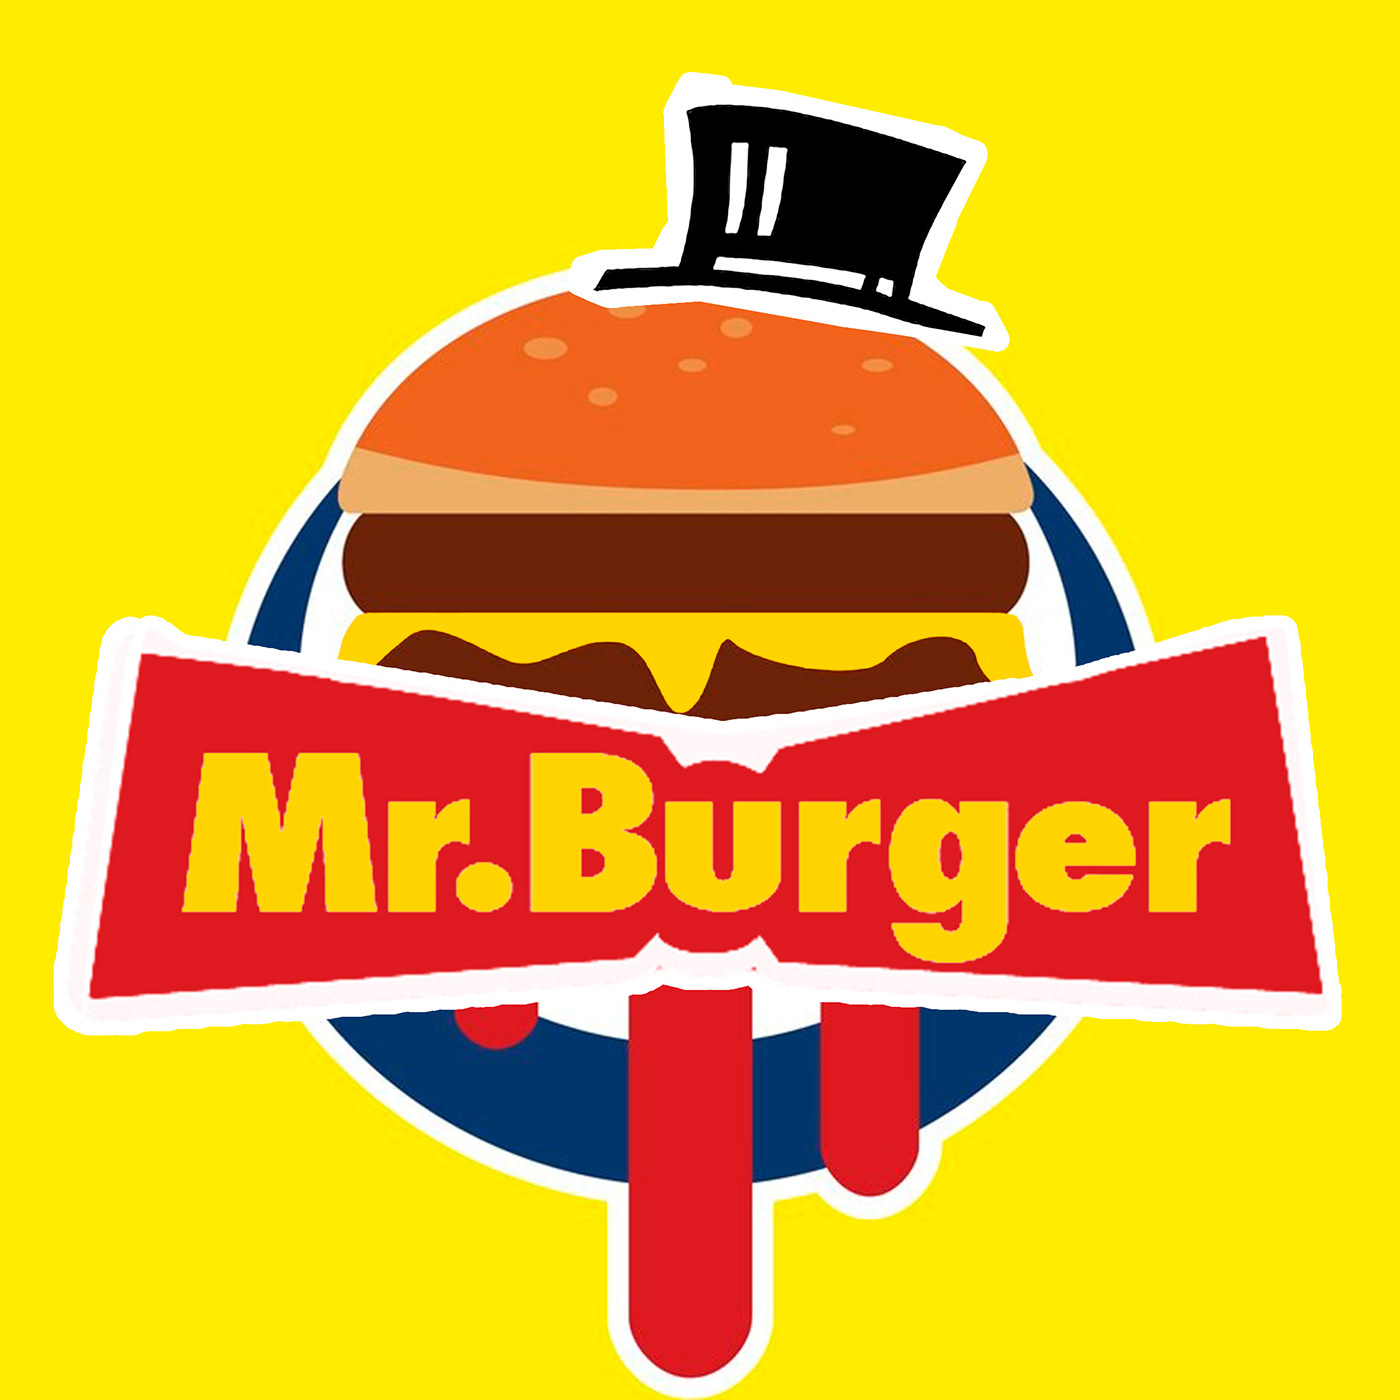 Mr burger. Мистер бургер. Гамбургер лого. Бургерная логотип. Мистер бургер логотип.